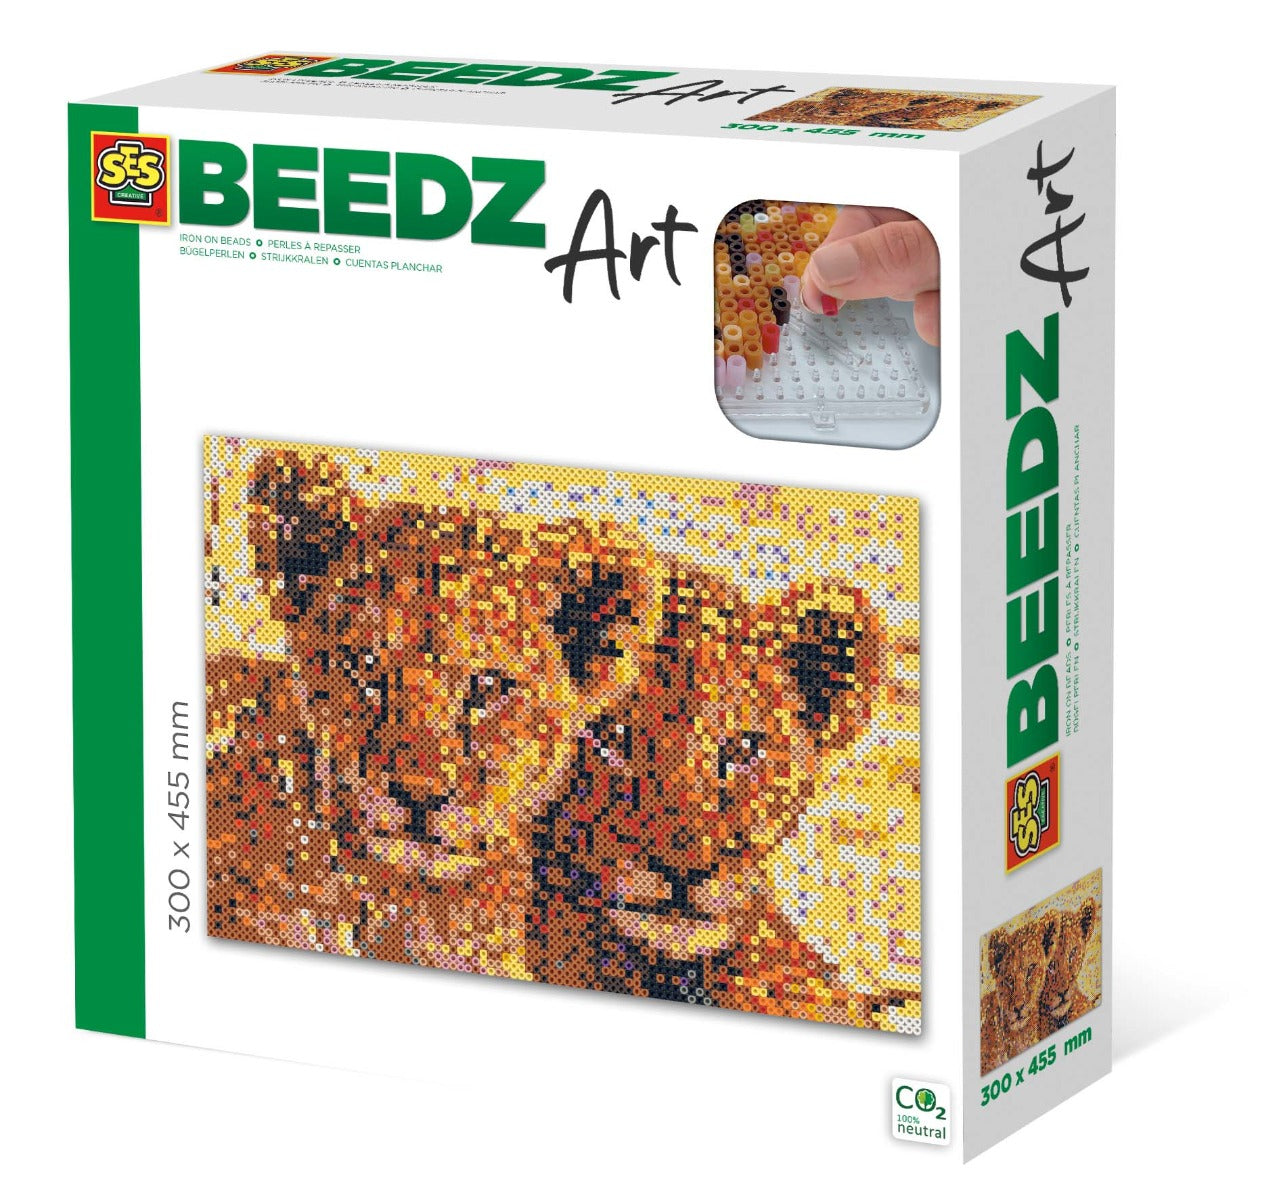 SES - Beedz Art - Lionceaux